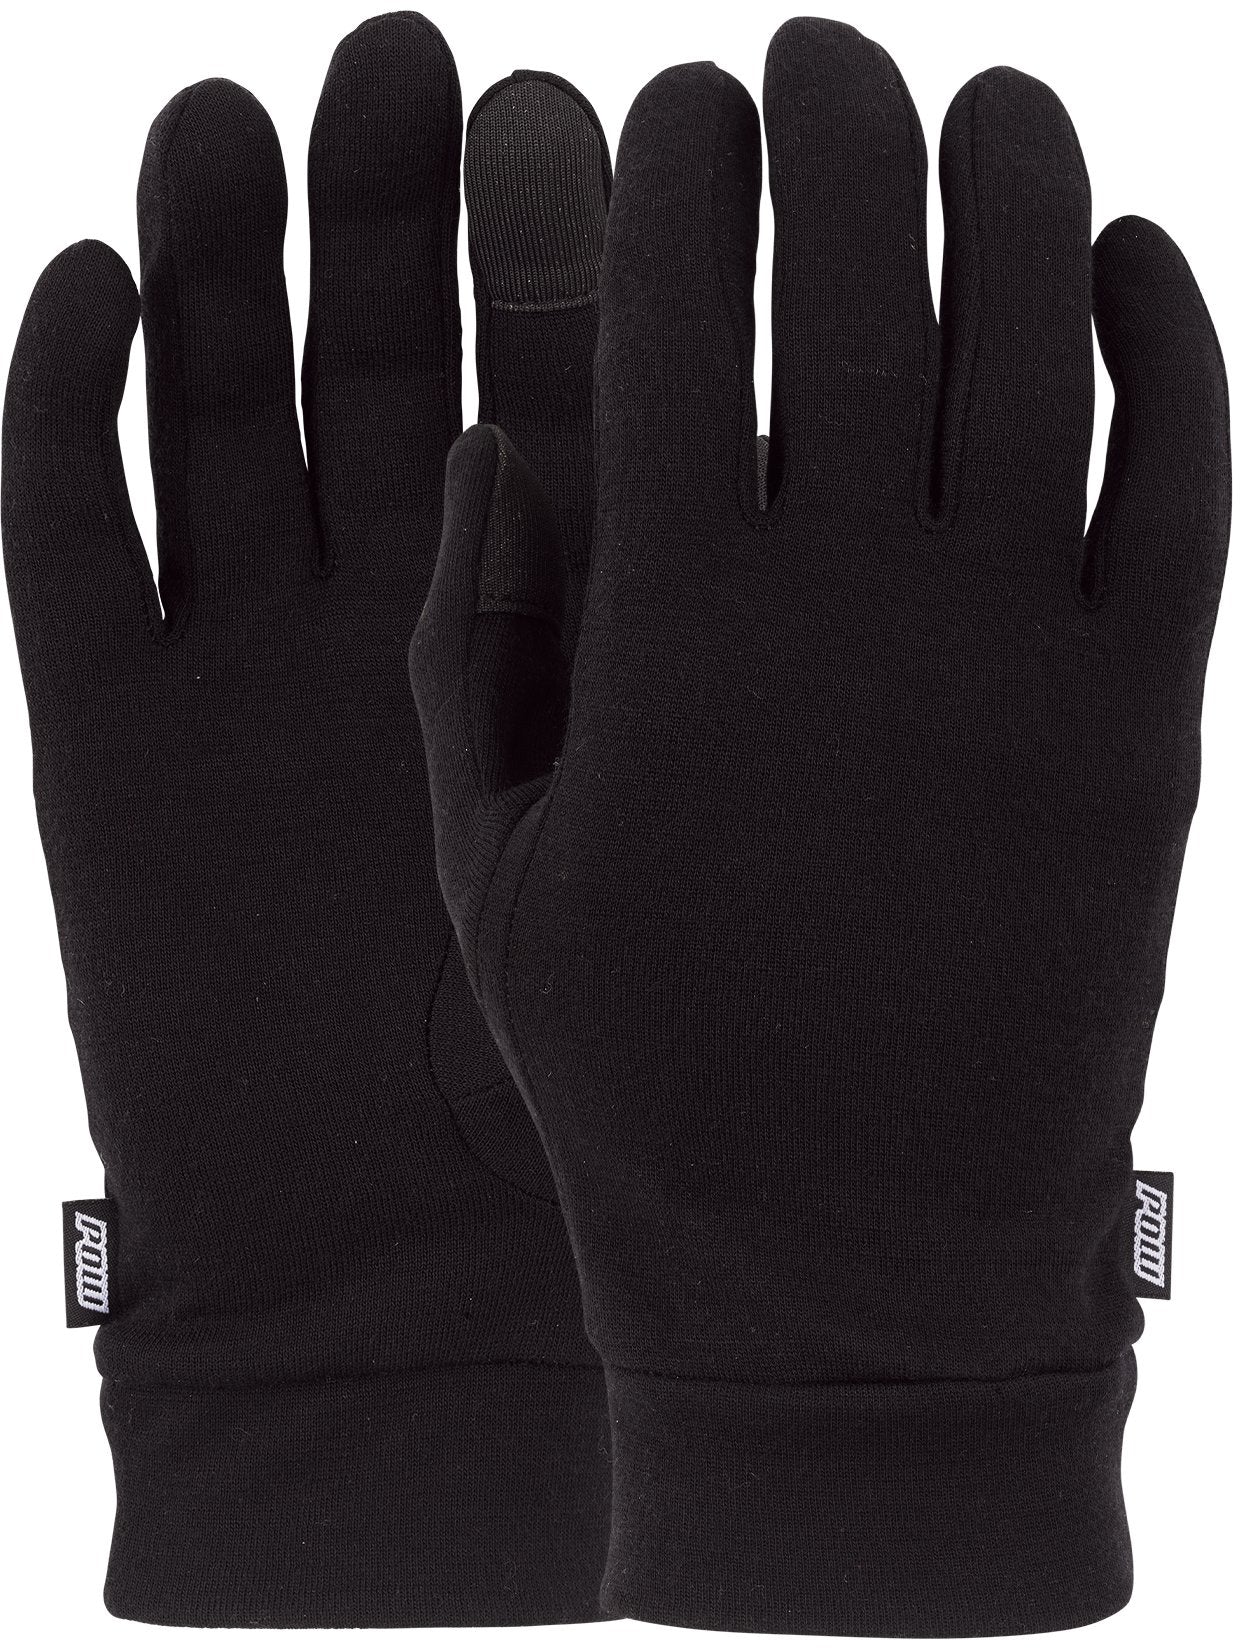 Men's Wool Gloves